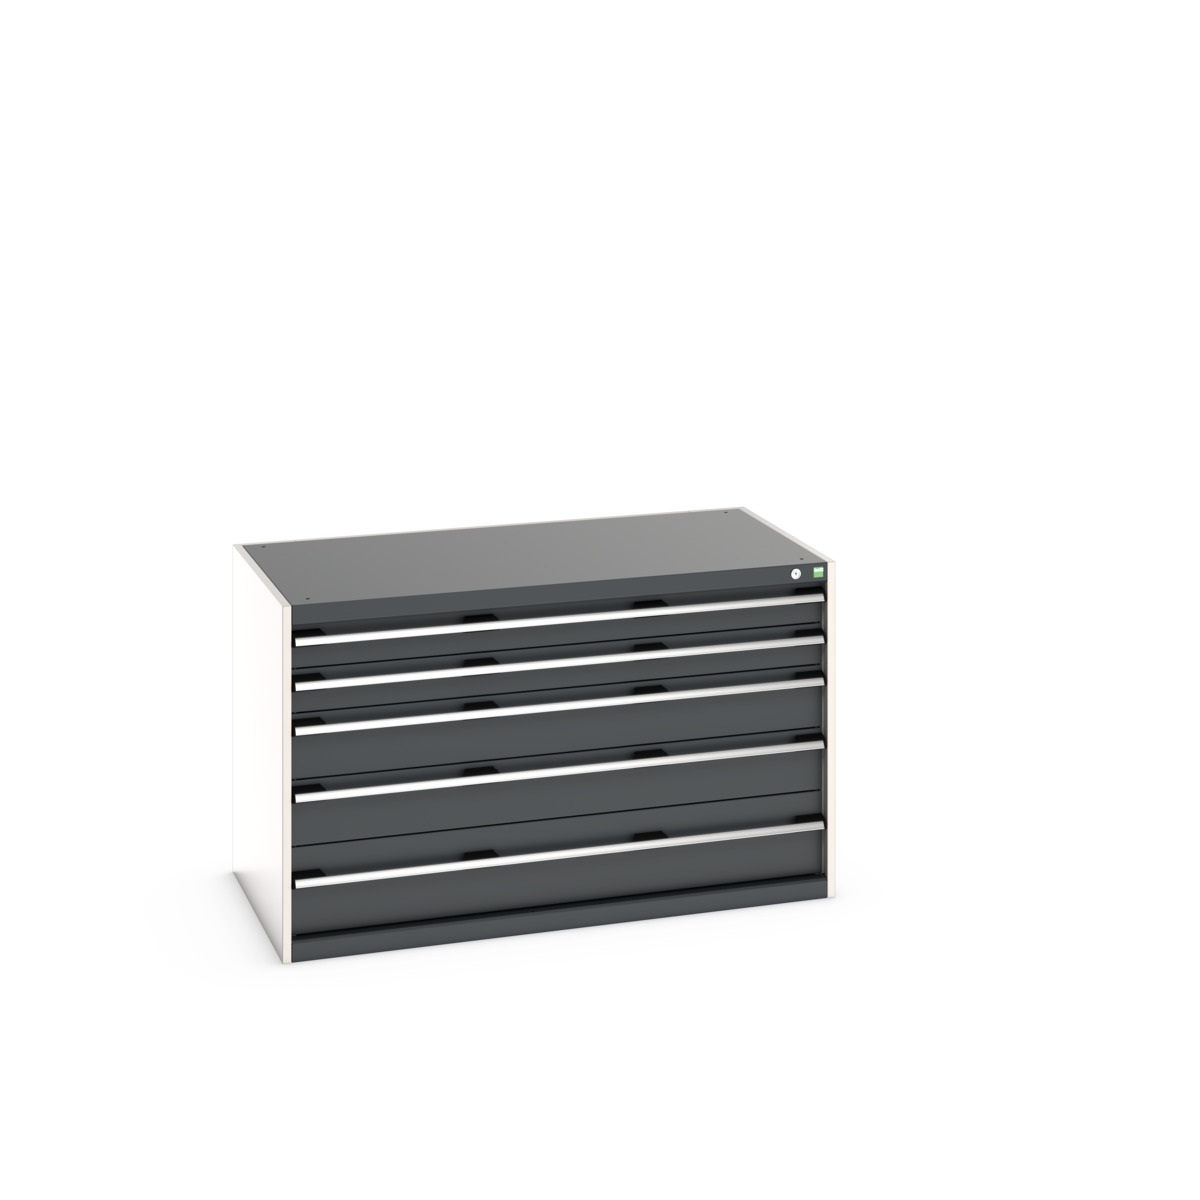 40030007. - cubio drawer cabinet